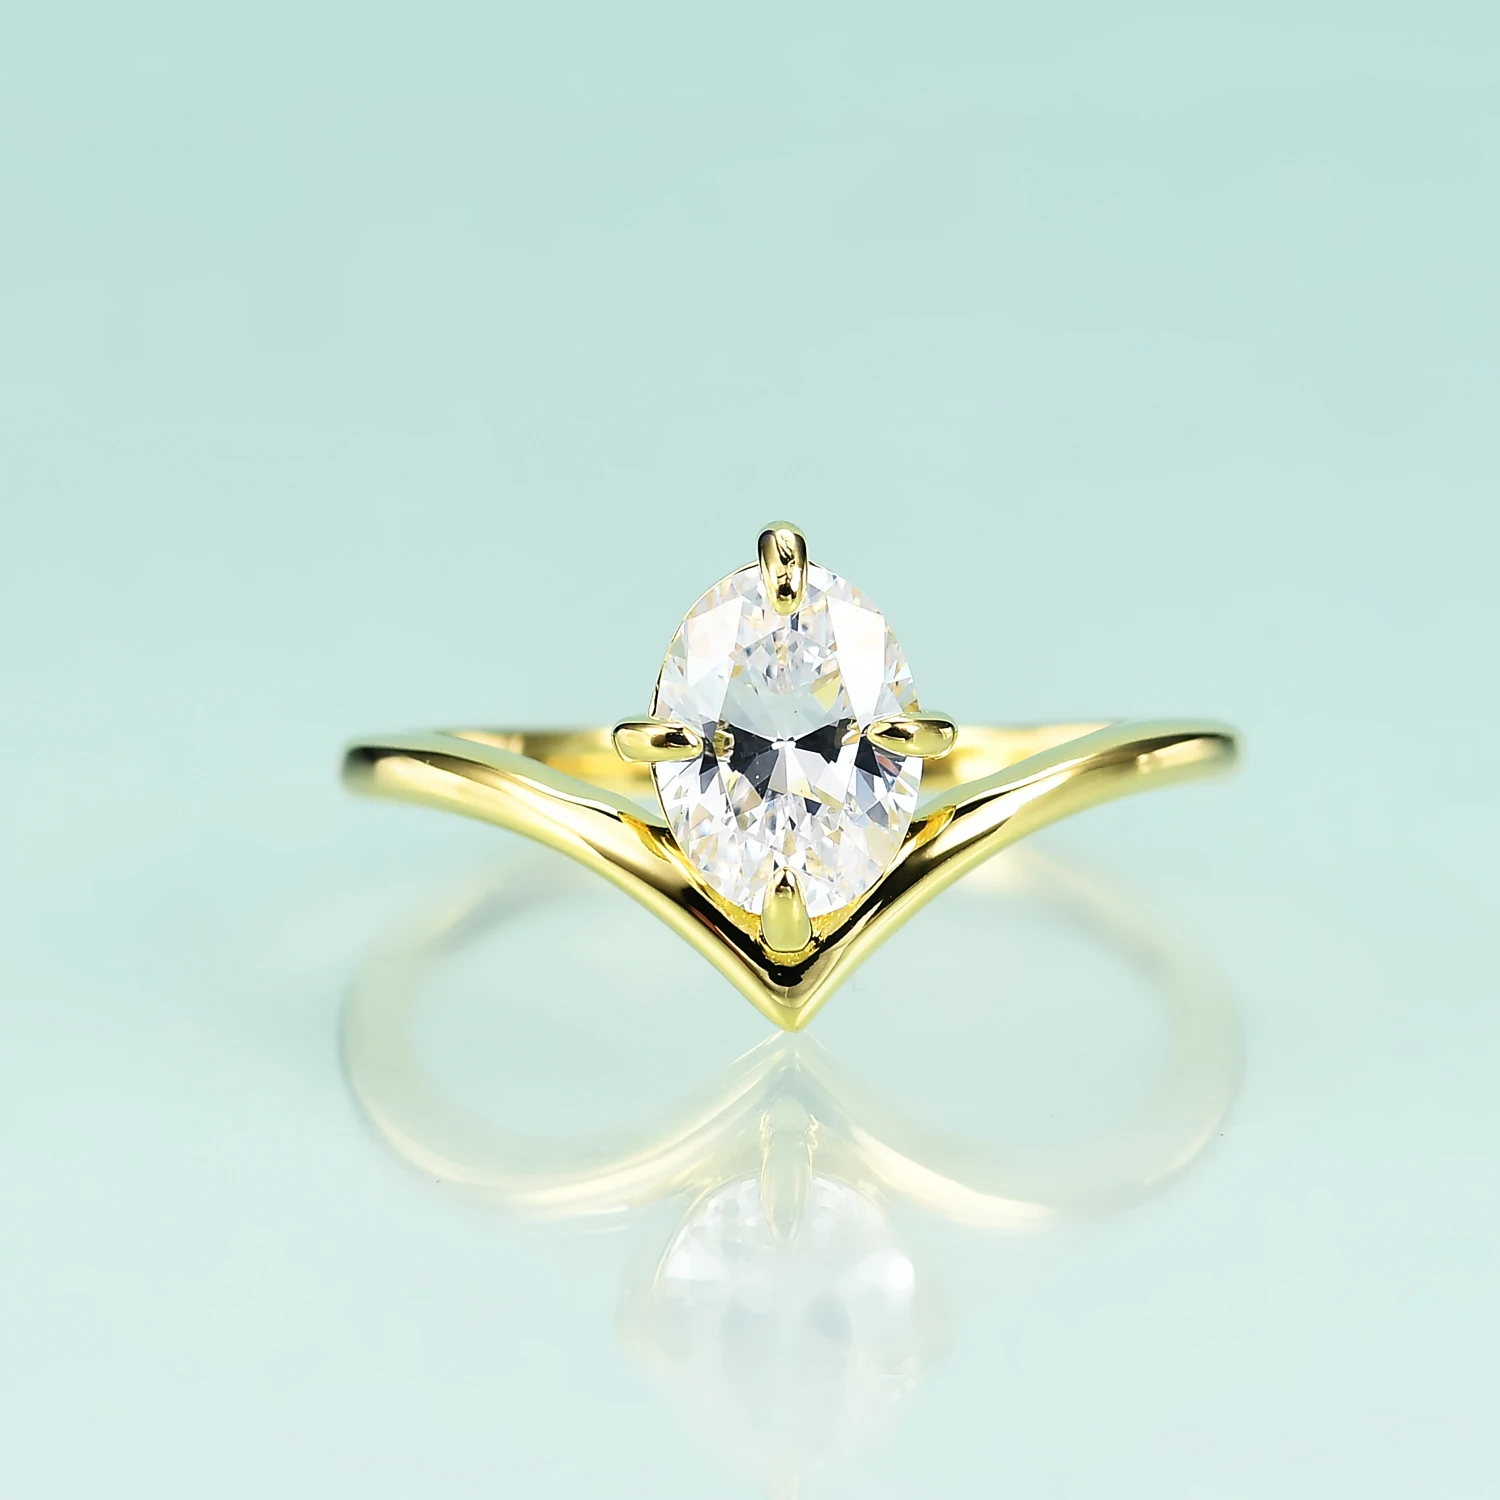 Gem's Beauty 585 14K Yellow Gold 1.5CT Moissanite Rings for Women Handmade Oval Rings Engagement Bride Gift Fine Jewelry New